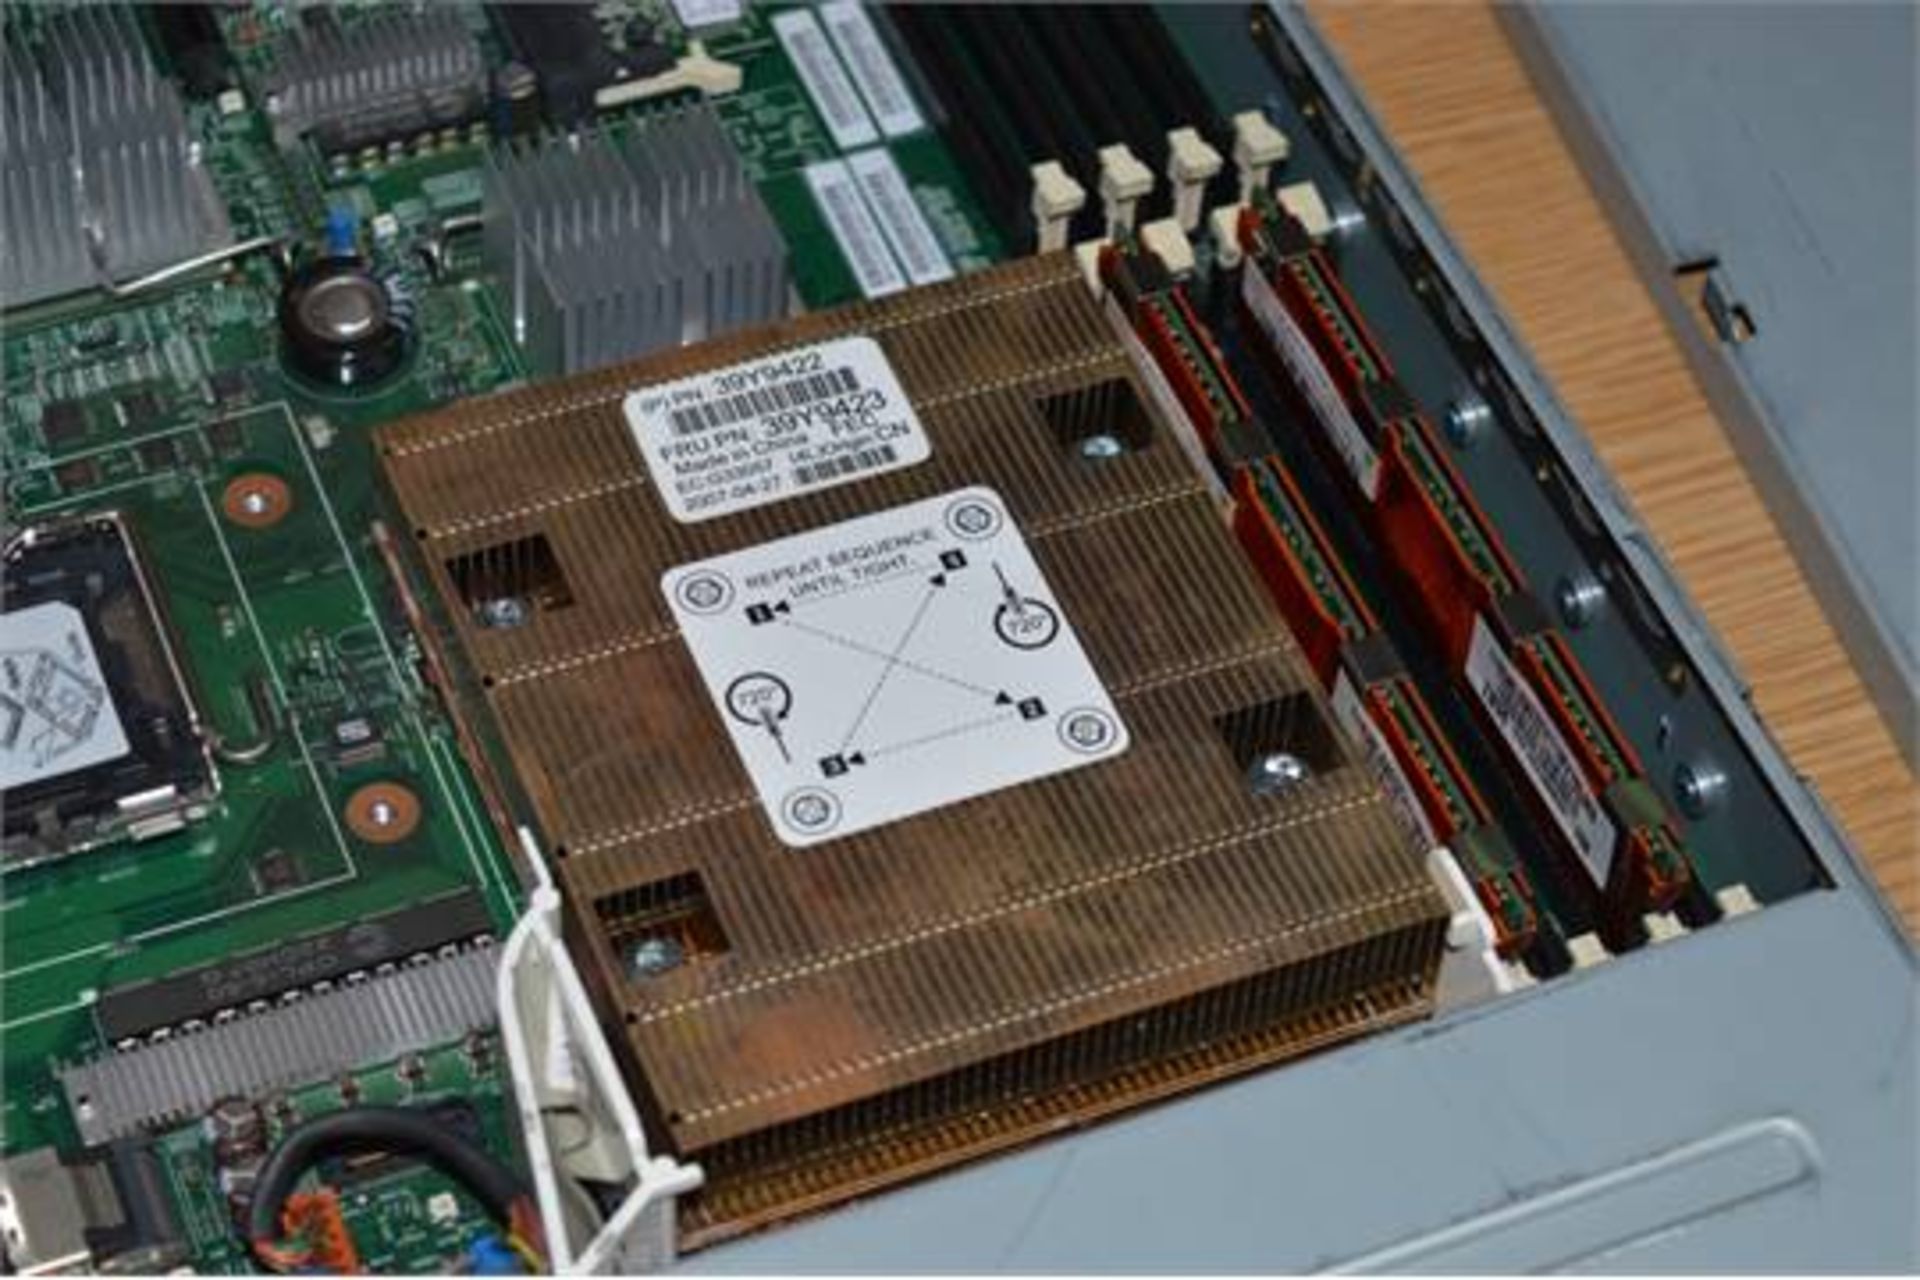 1 x IBM 1U Server Model X3550 - Xeon Processor, 4gb Ram, 3 x 73.4gb SAS Hard Drives, Two Plower - Image 3 of 4